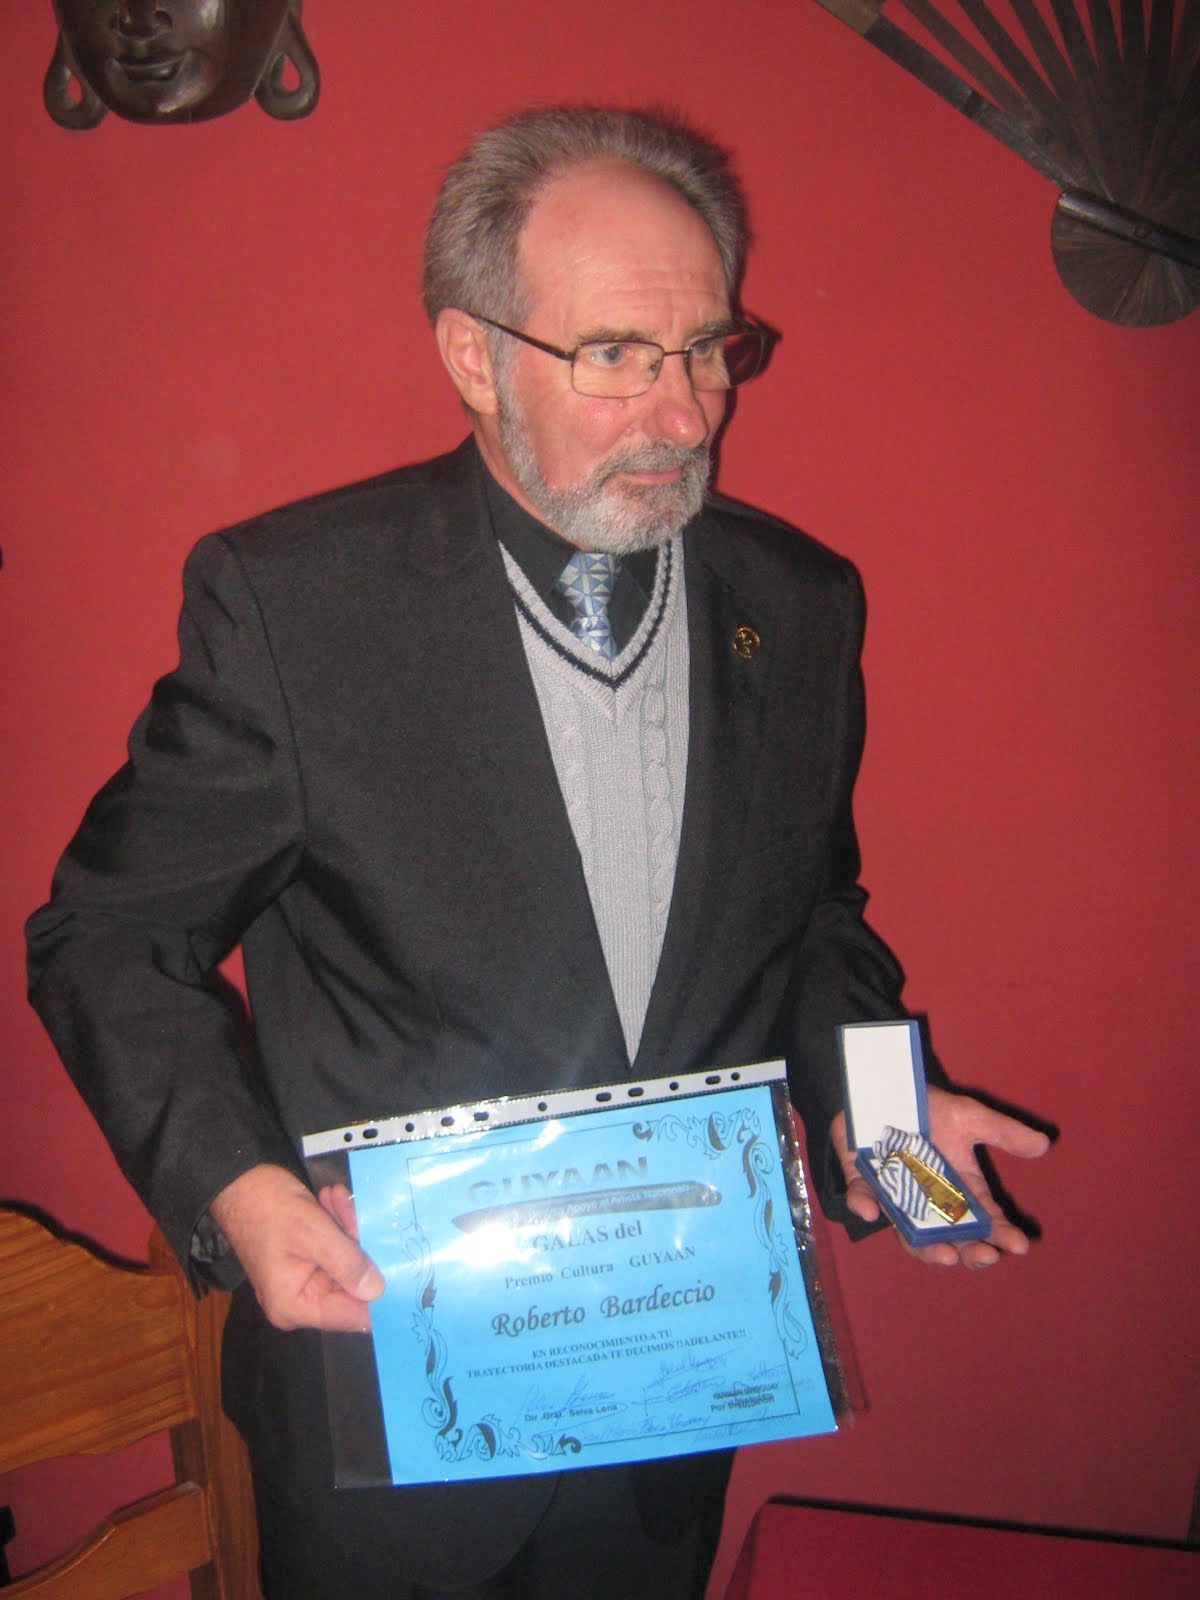 Premio GUYAAN 2014